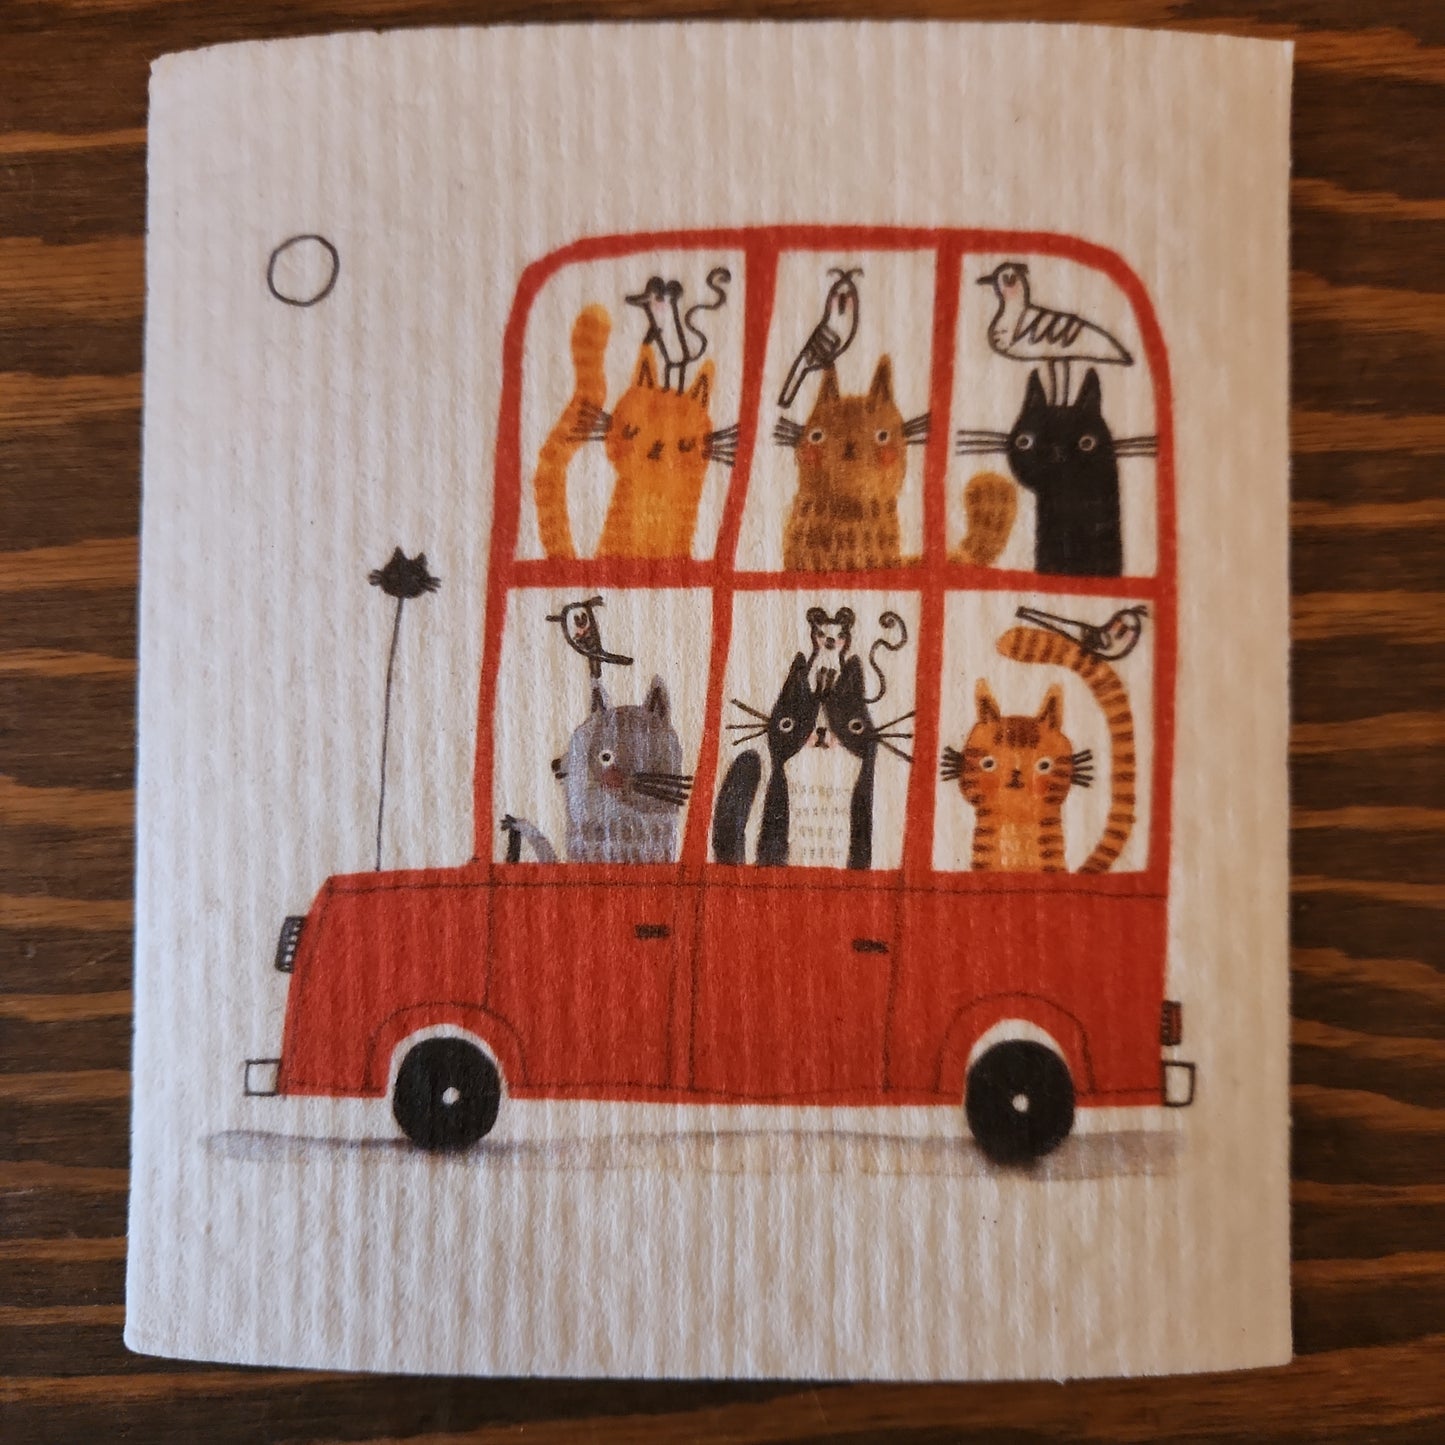 Swedish Dishcloths: Fun and Funky Paper Towel Swap